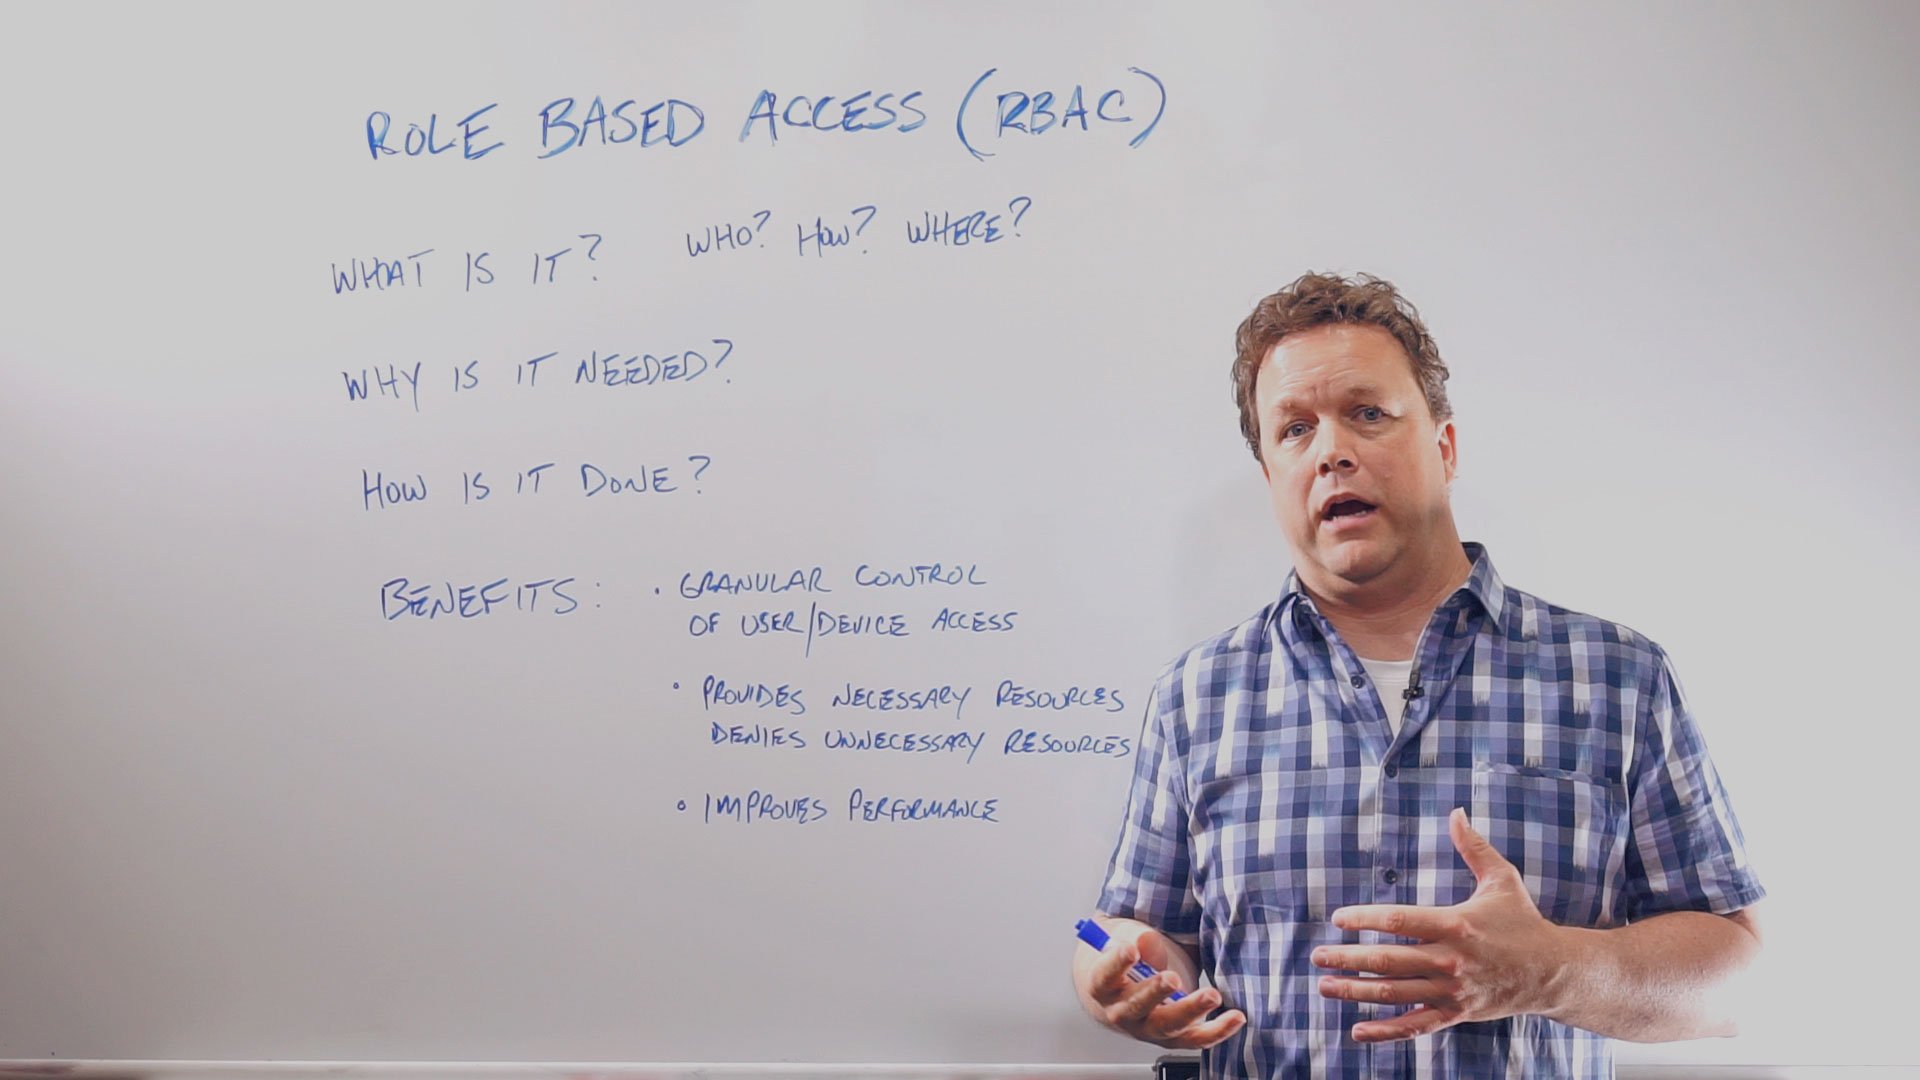 Michael McNamee explaining rbac at a whiteboard